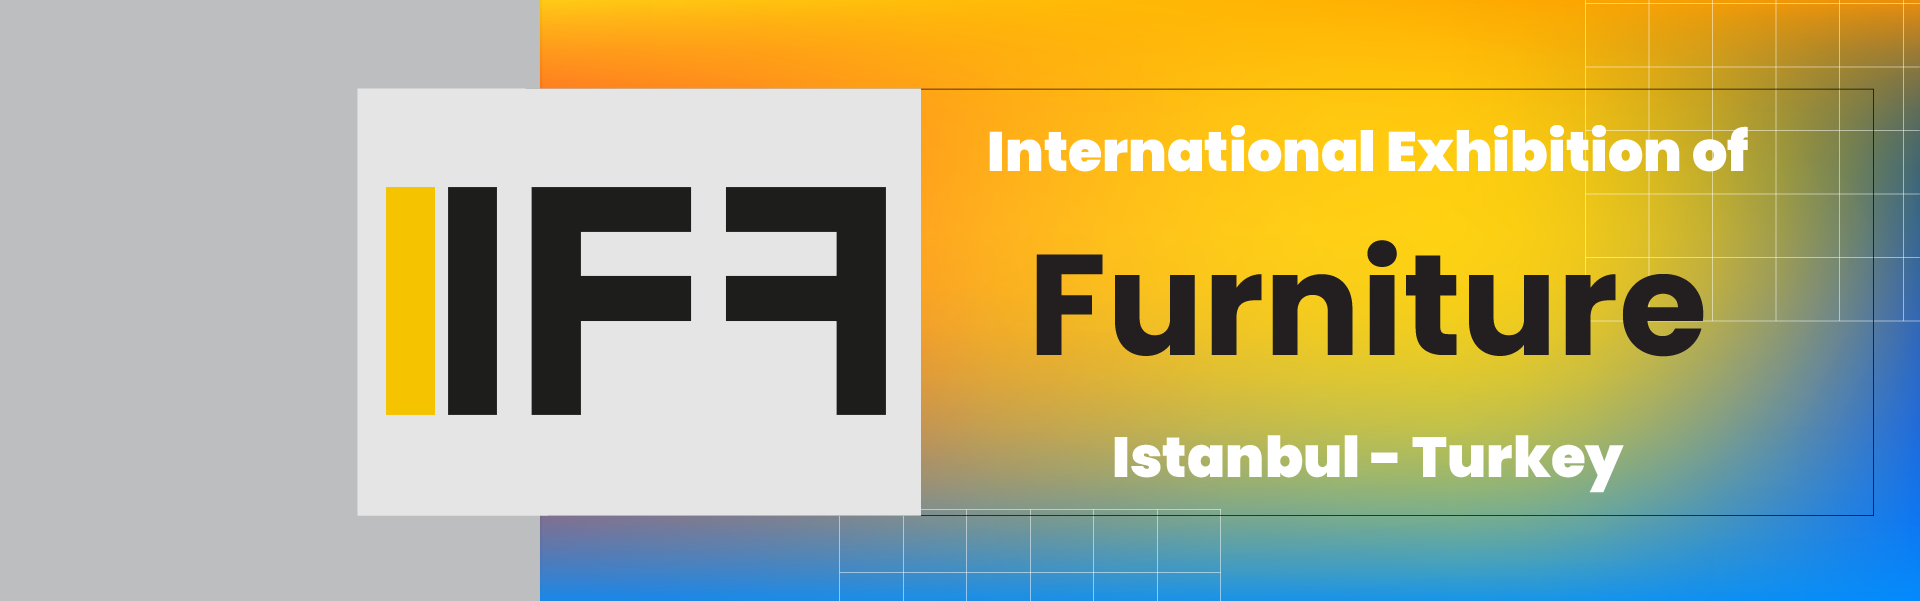 Istanbul Furniture Exhibition